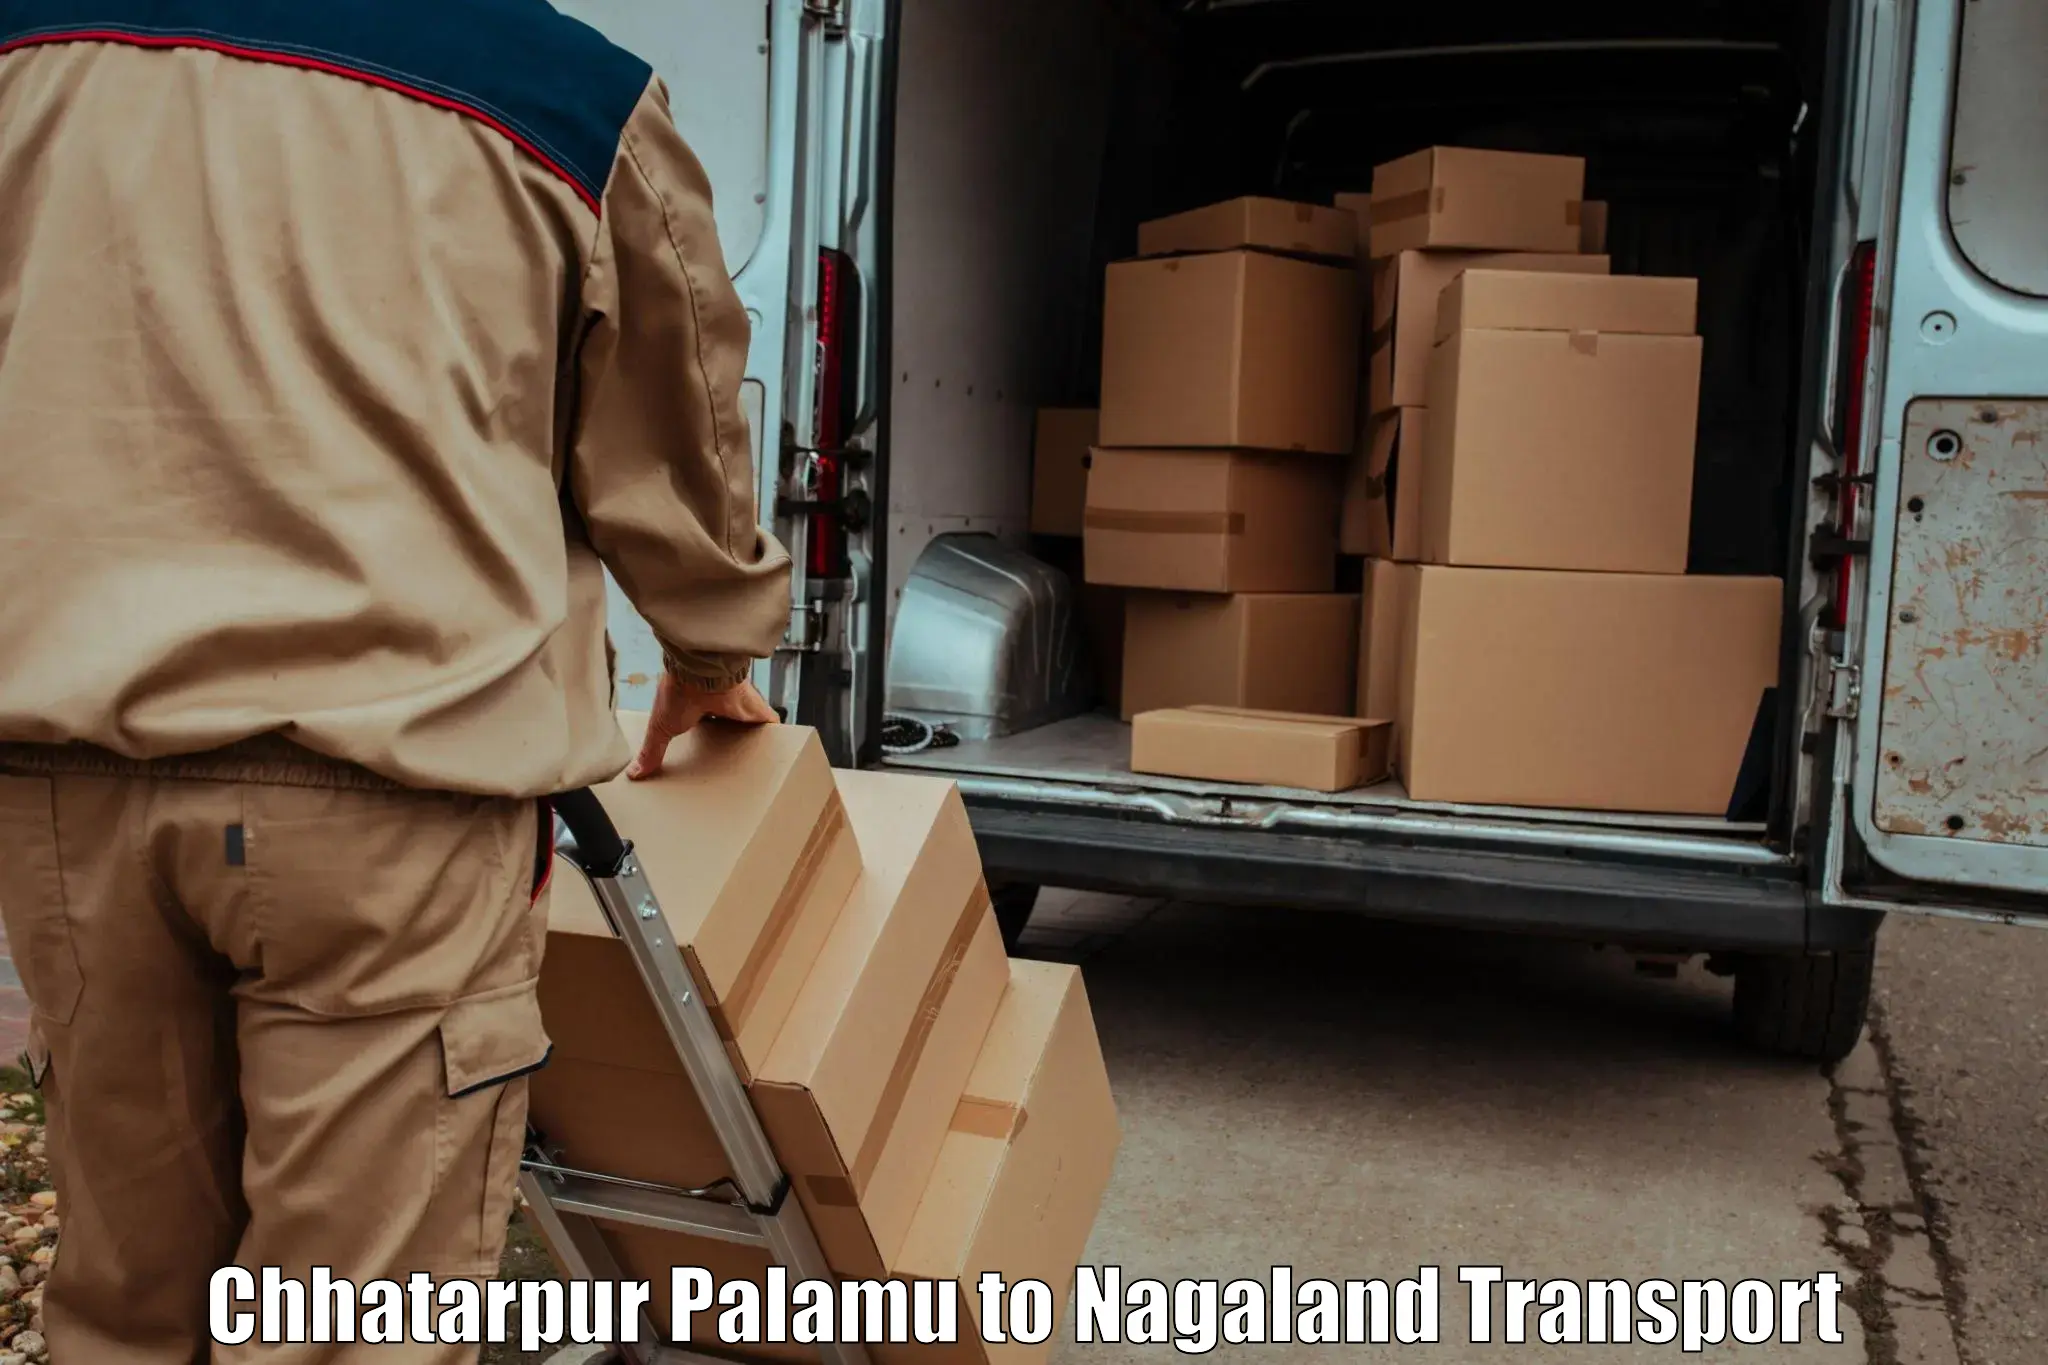 Transport services in Chhatarpur Palamu to Nagaland